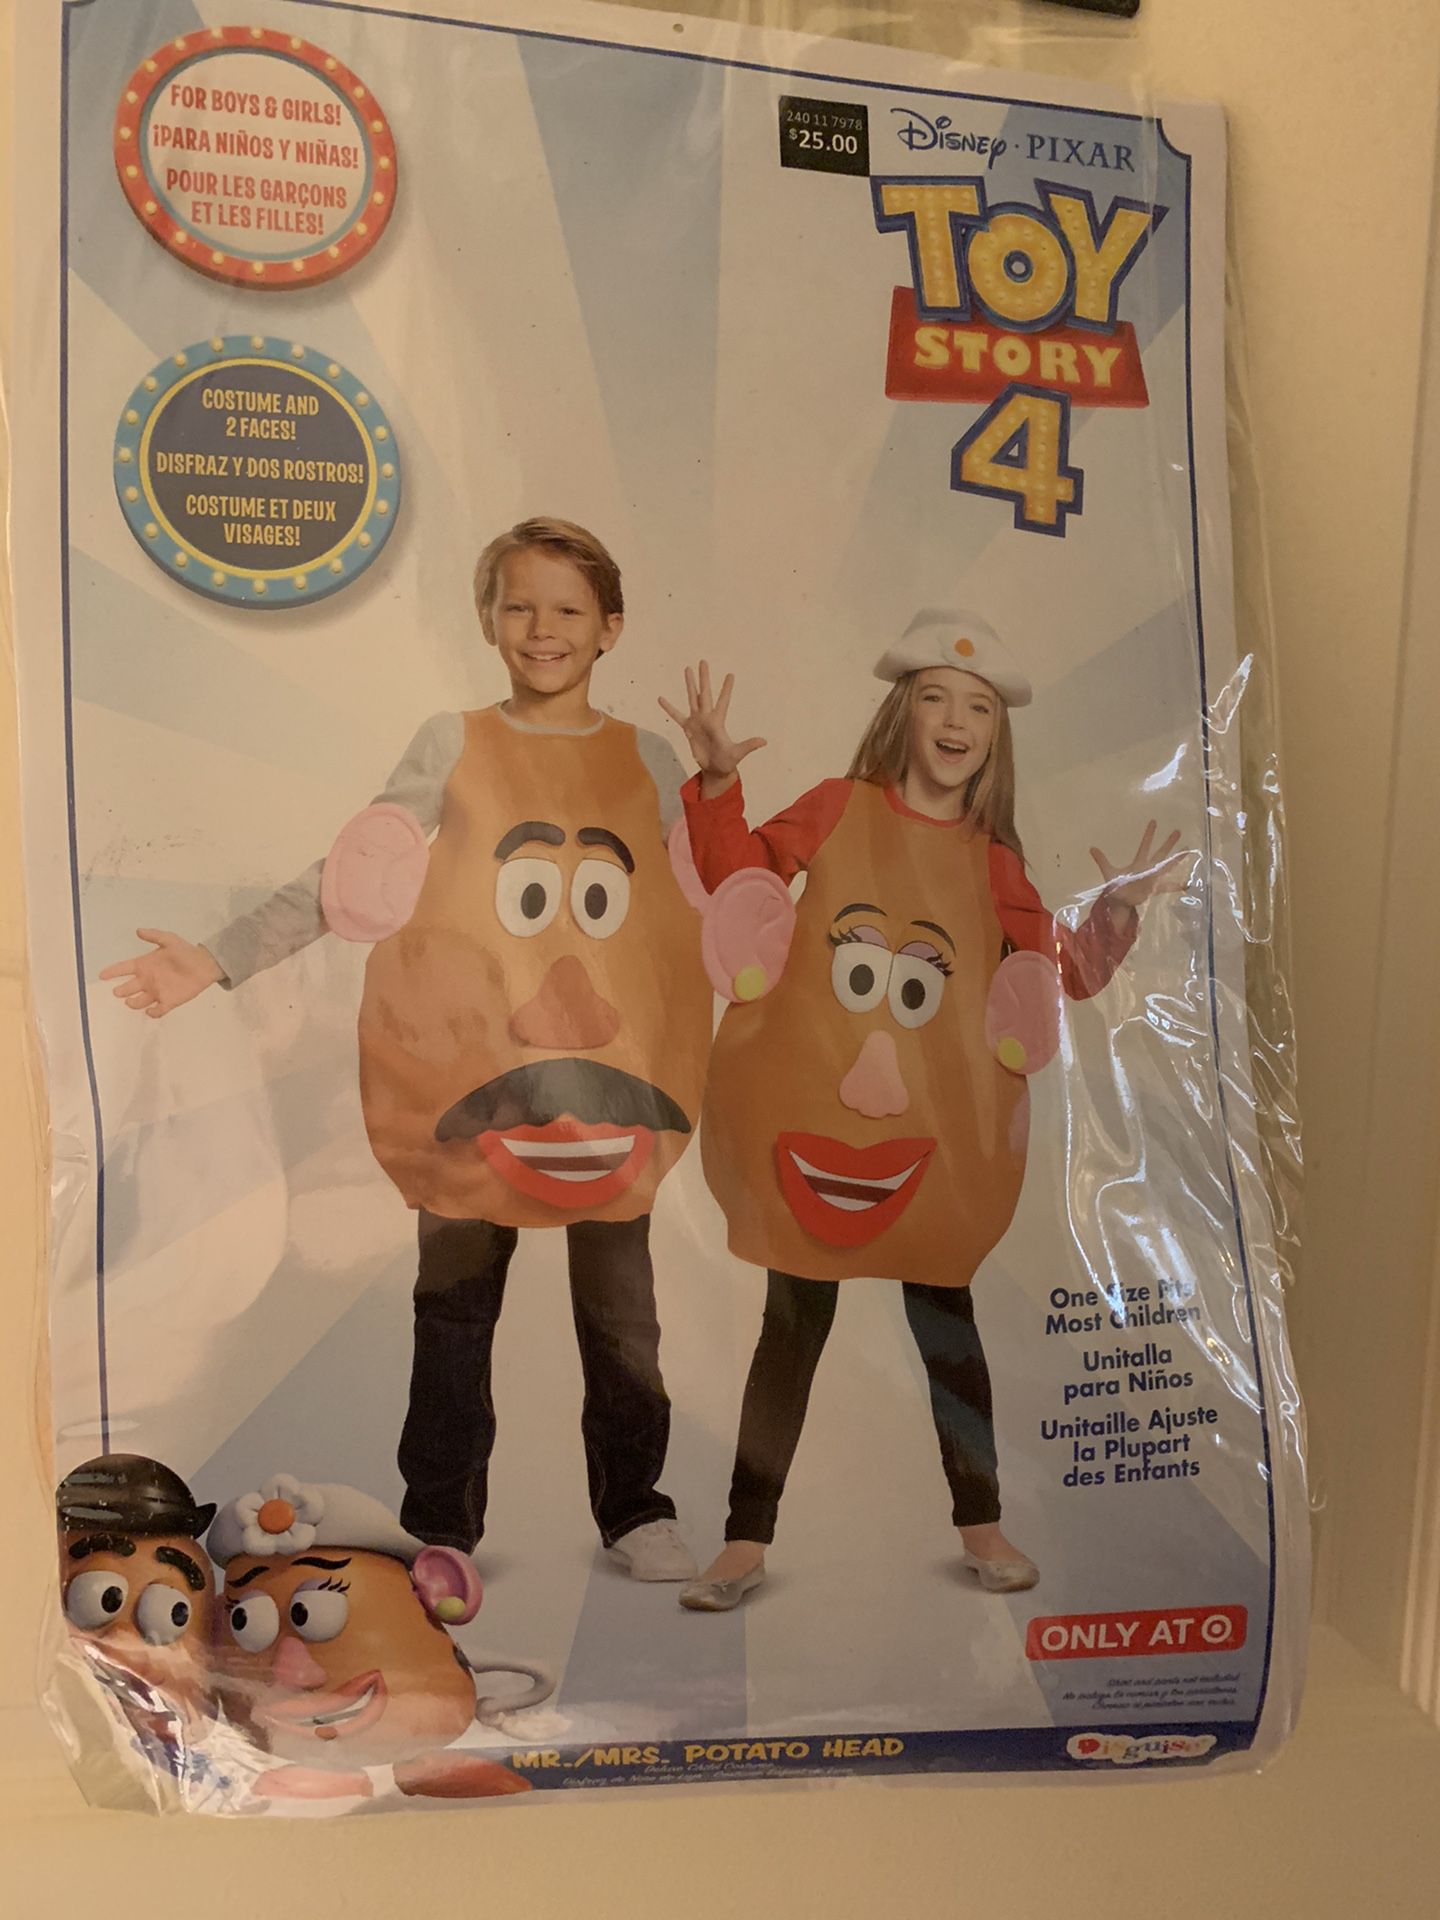 Potato head costume